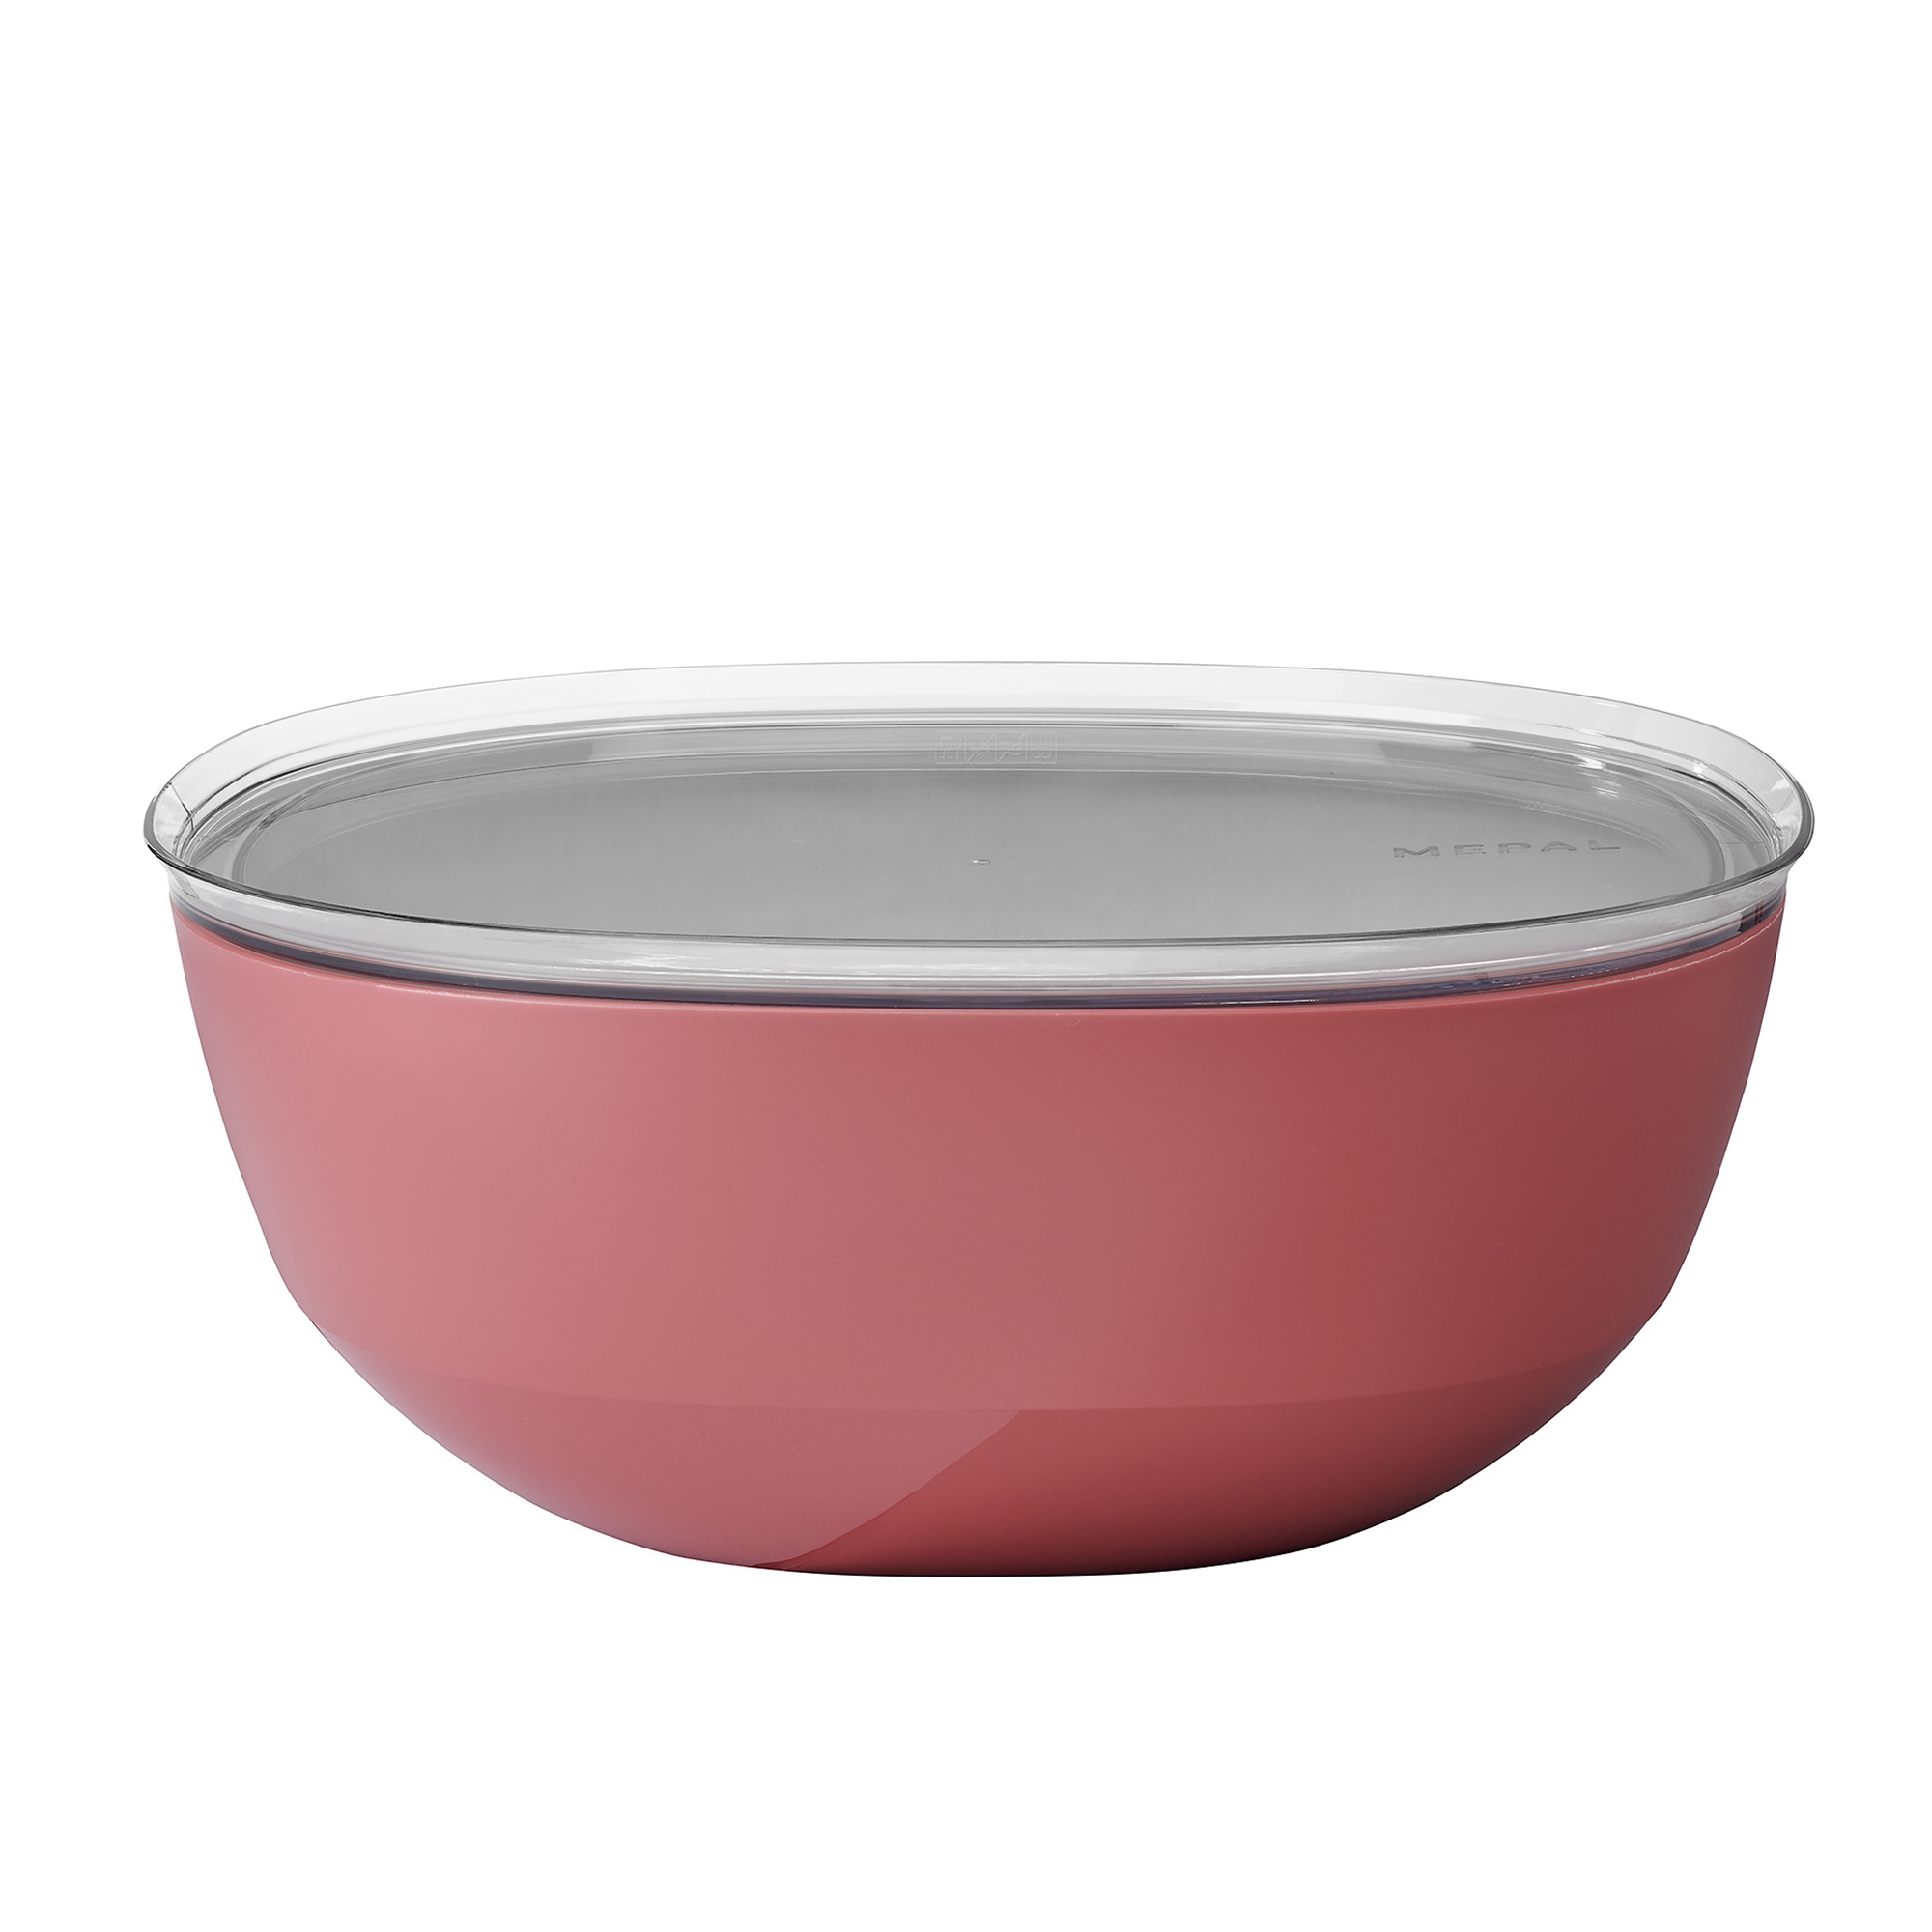 Mepal - Silueta serving bowl with lid - 5 L - Vivid mauve